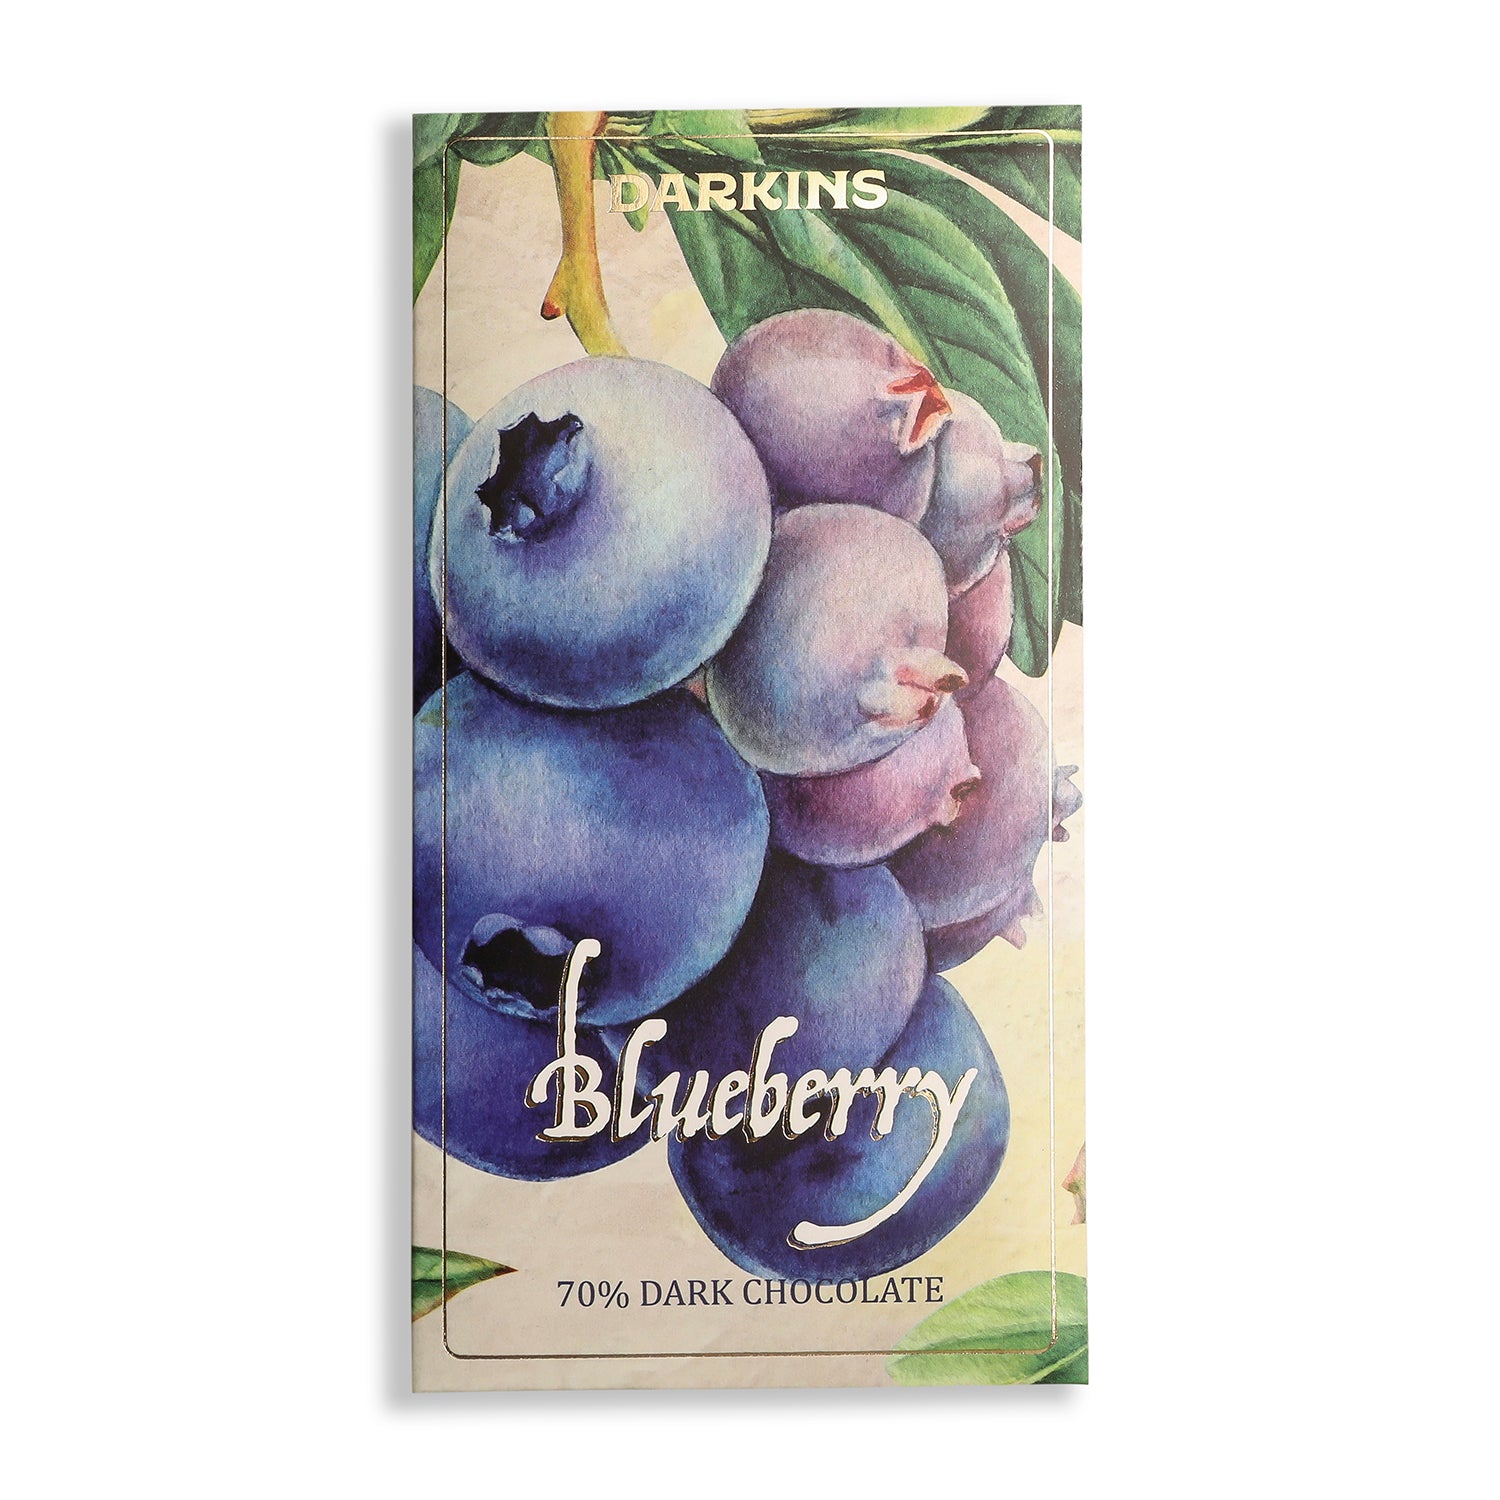 Load image into Gallery viewer, 70% Dark Chocolate with Blueberries - Darkins Chocolates